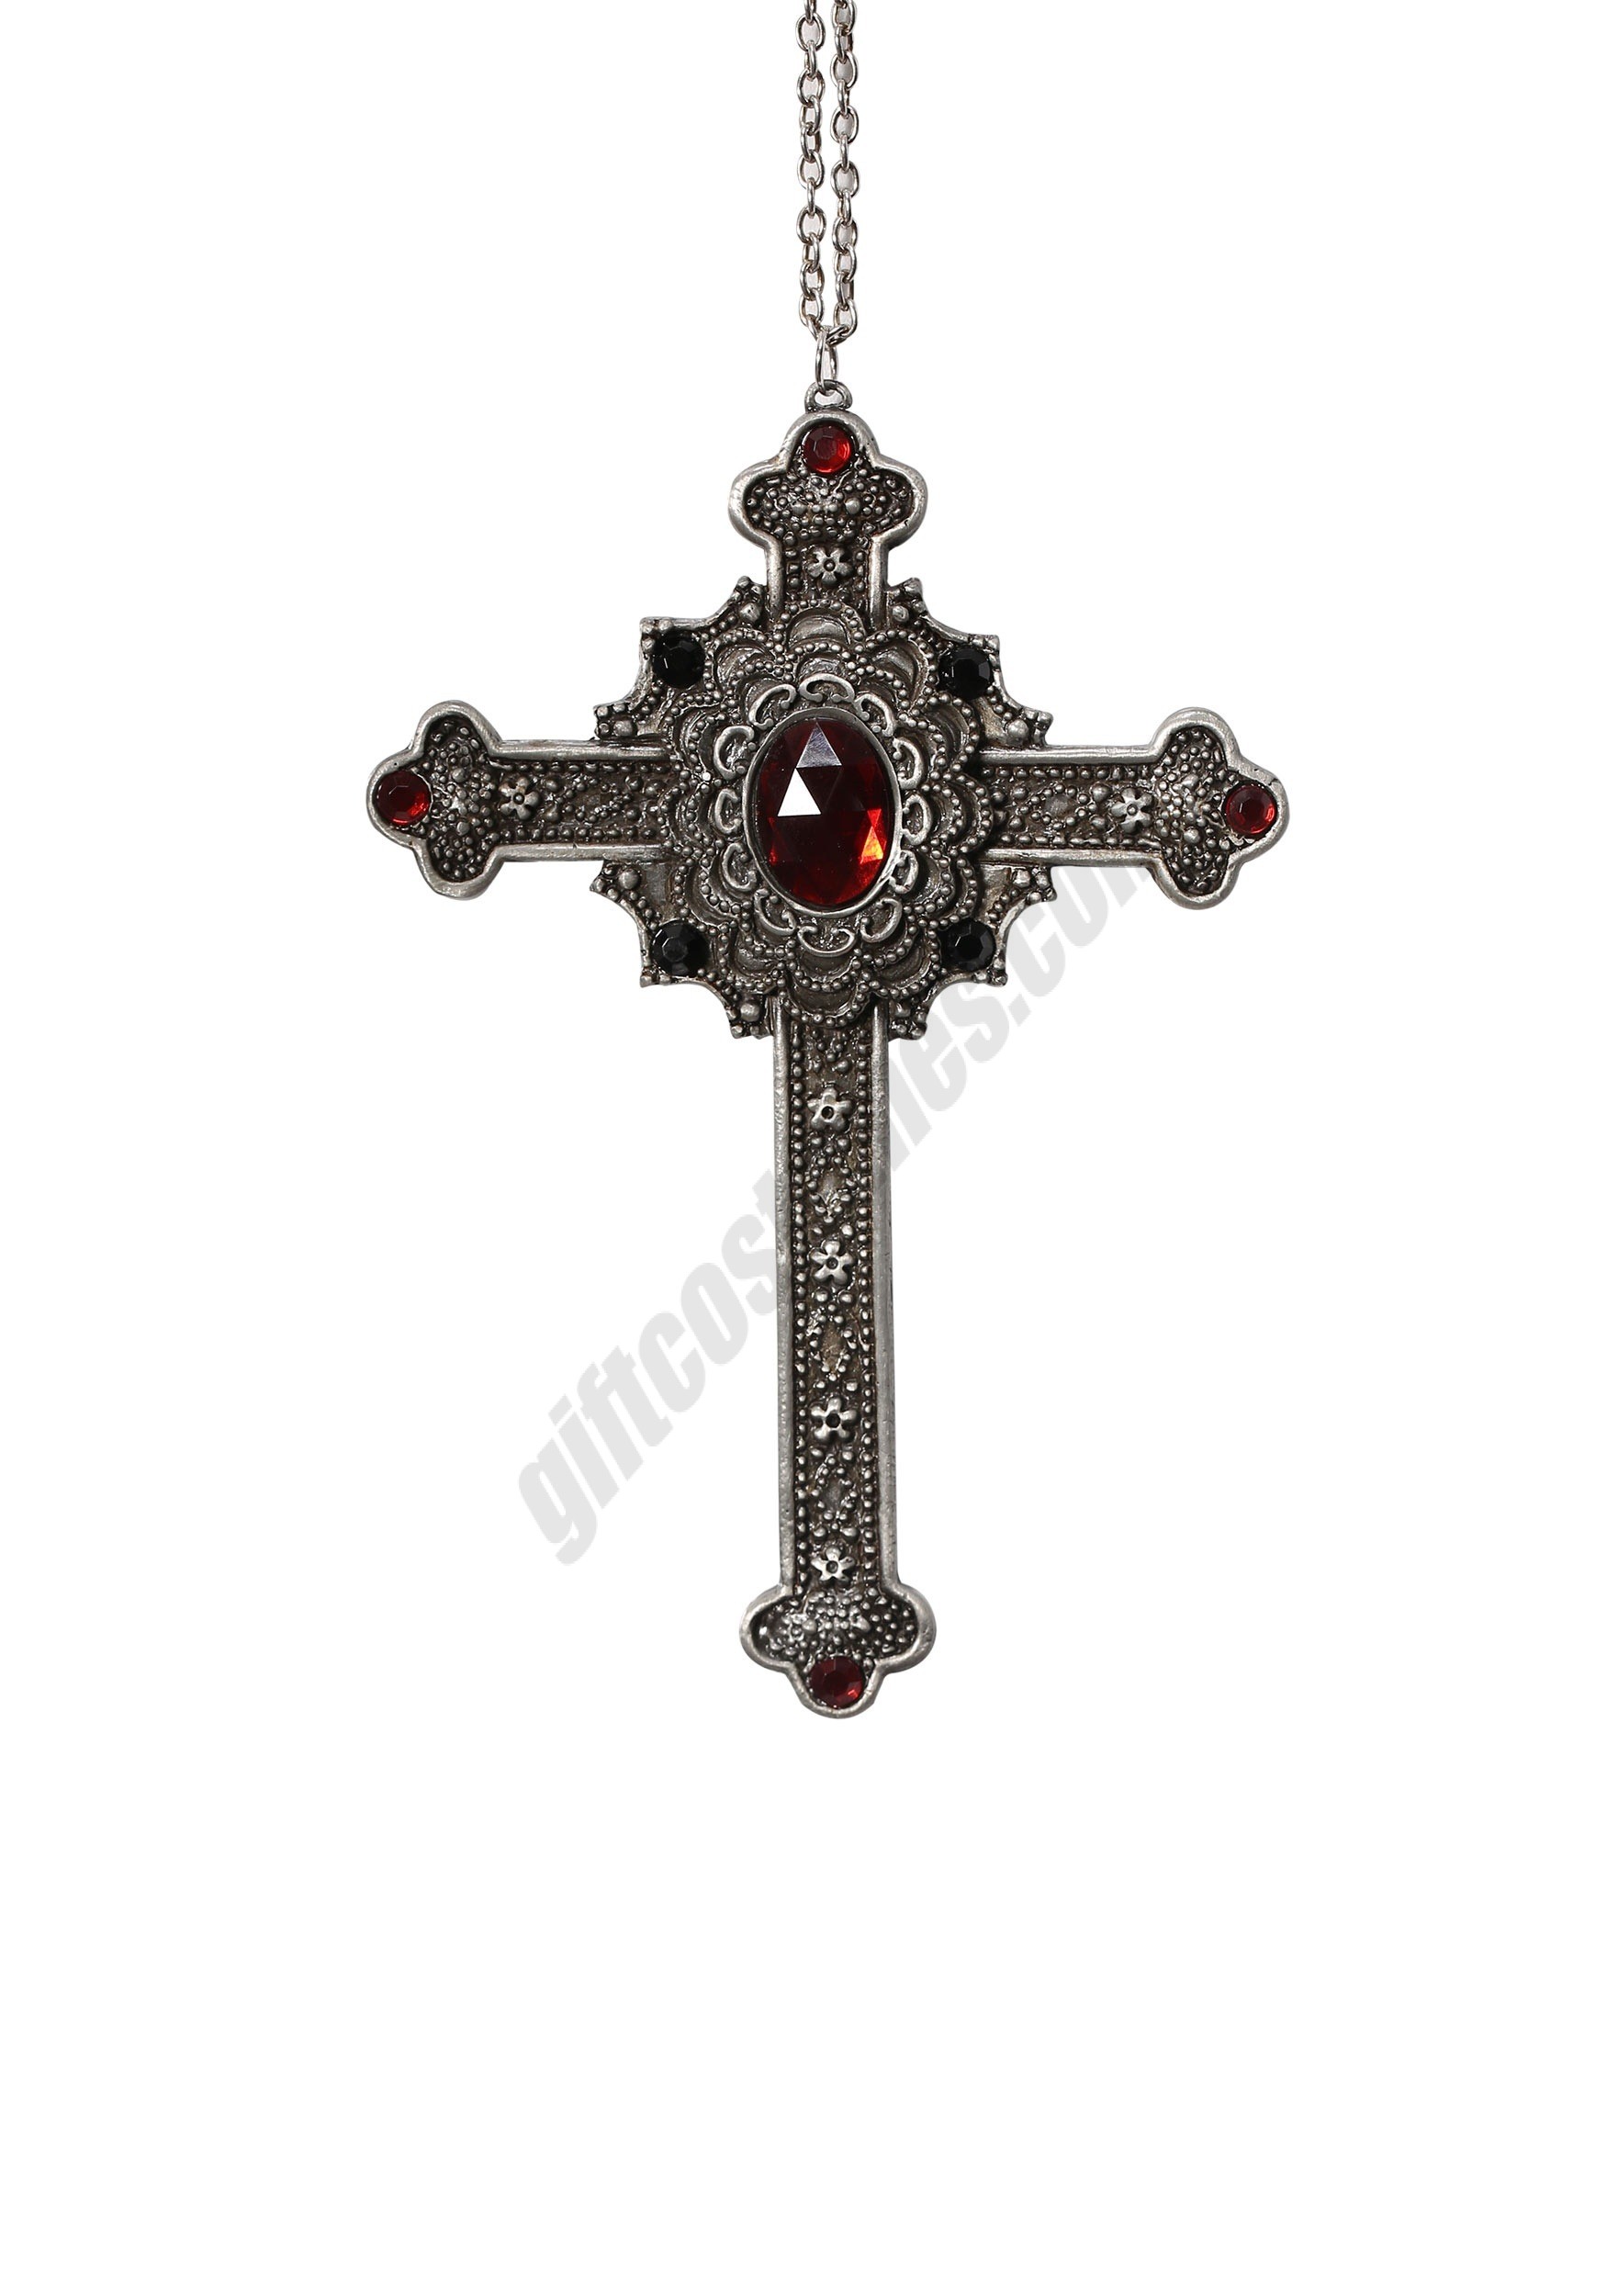 Nun Gothic Cross Necklace Promotions - Nun Gothic Cross Necklace Promotions